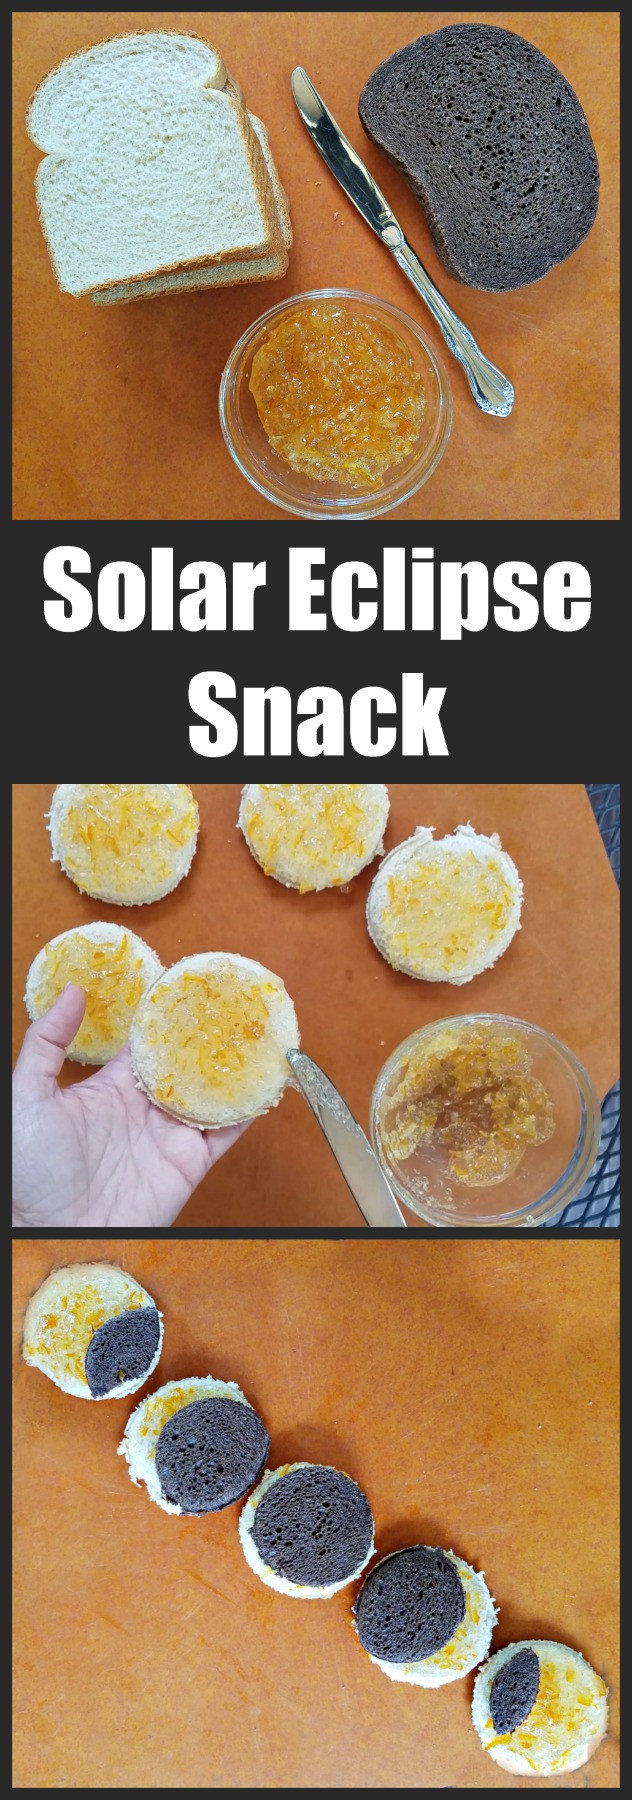 Eclipse Party Food Ideas
 Solar Eclipse Food Ideas & Science Activities Edventures